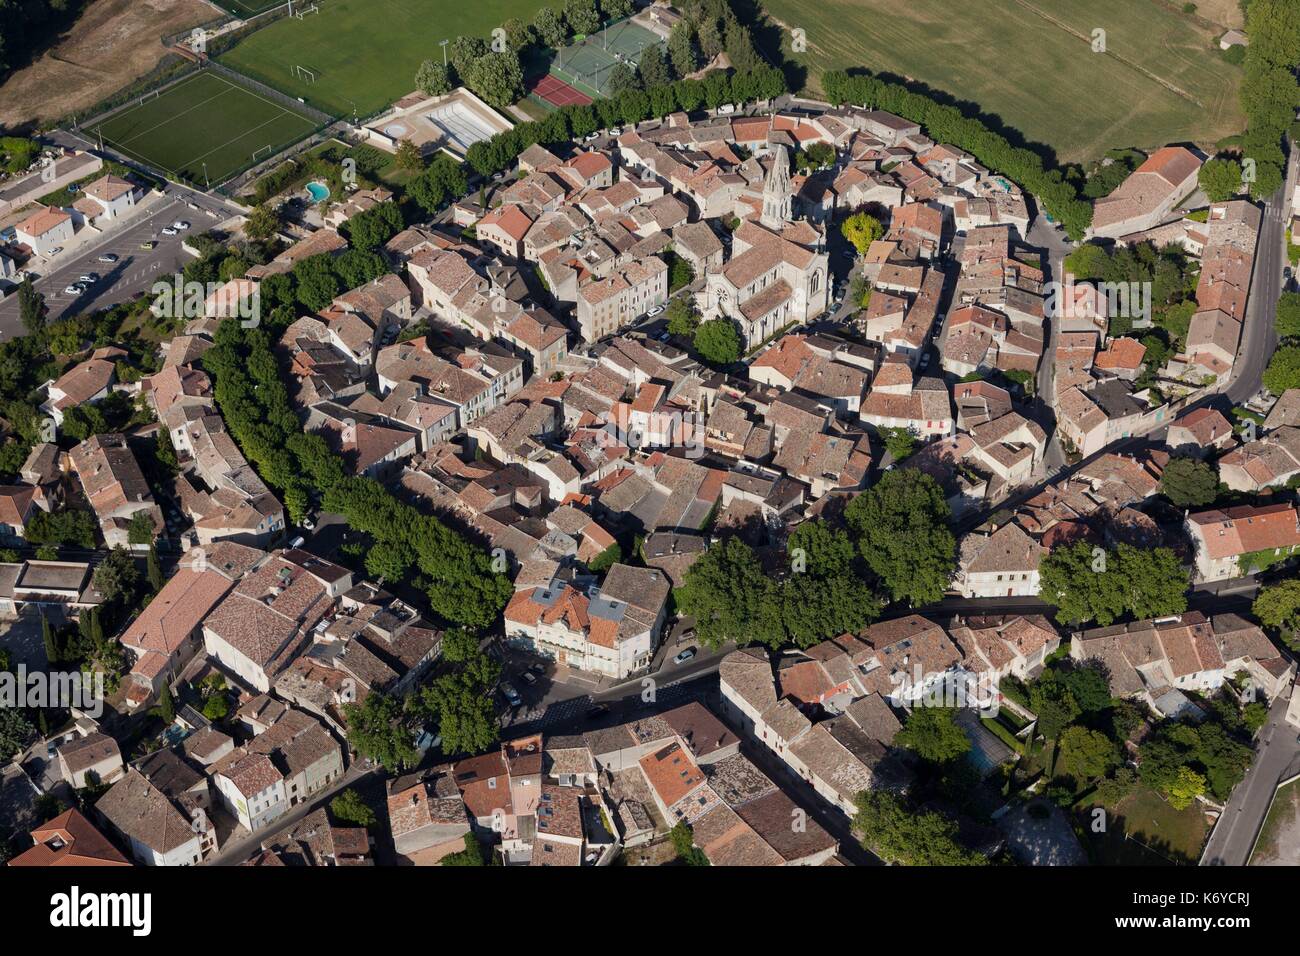 France, Bouches du Rhone, Saint Cannat (aerial view) Stock Photo